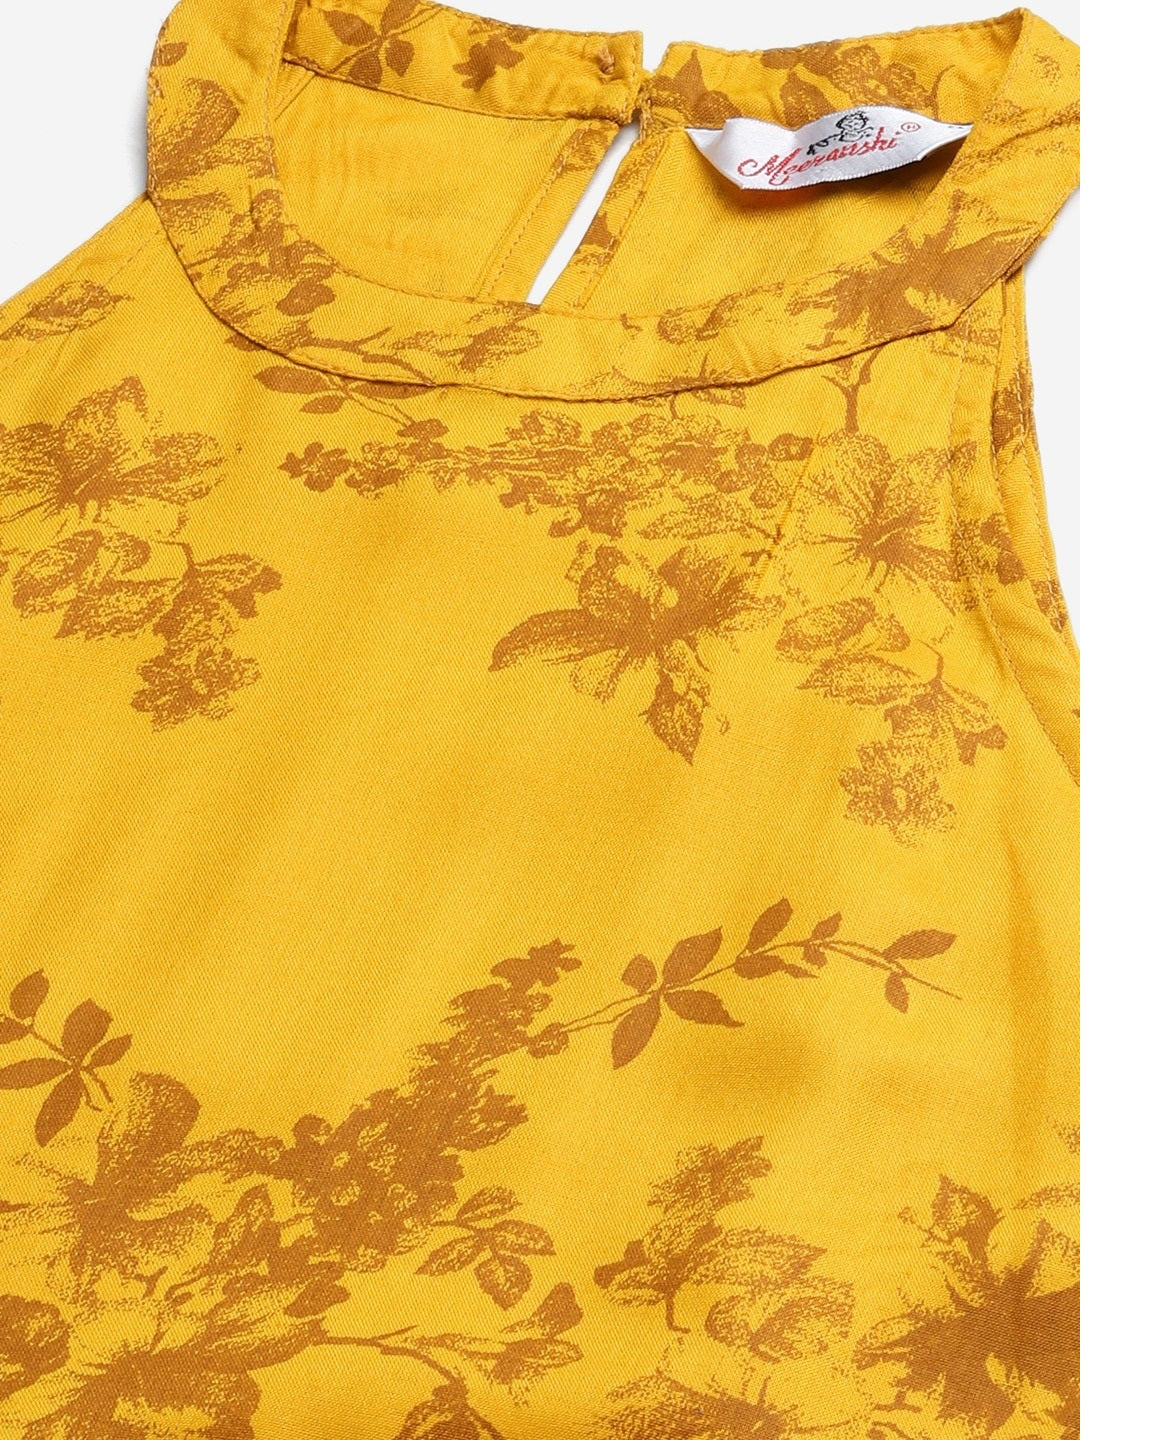 Yellow Floral Print Midi Dress